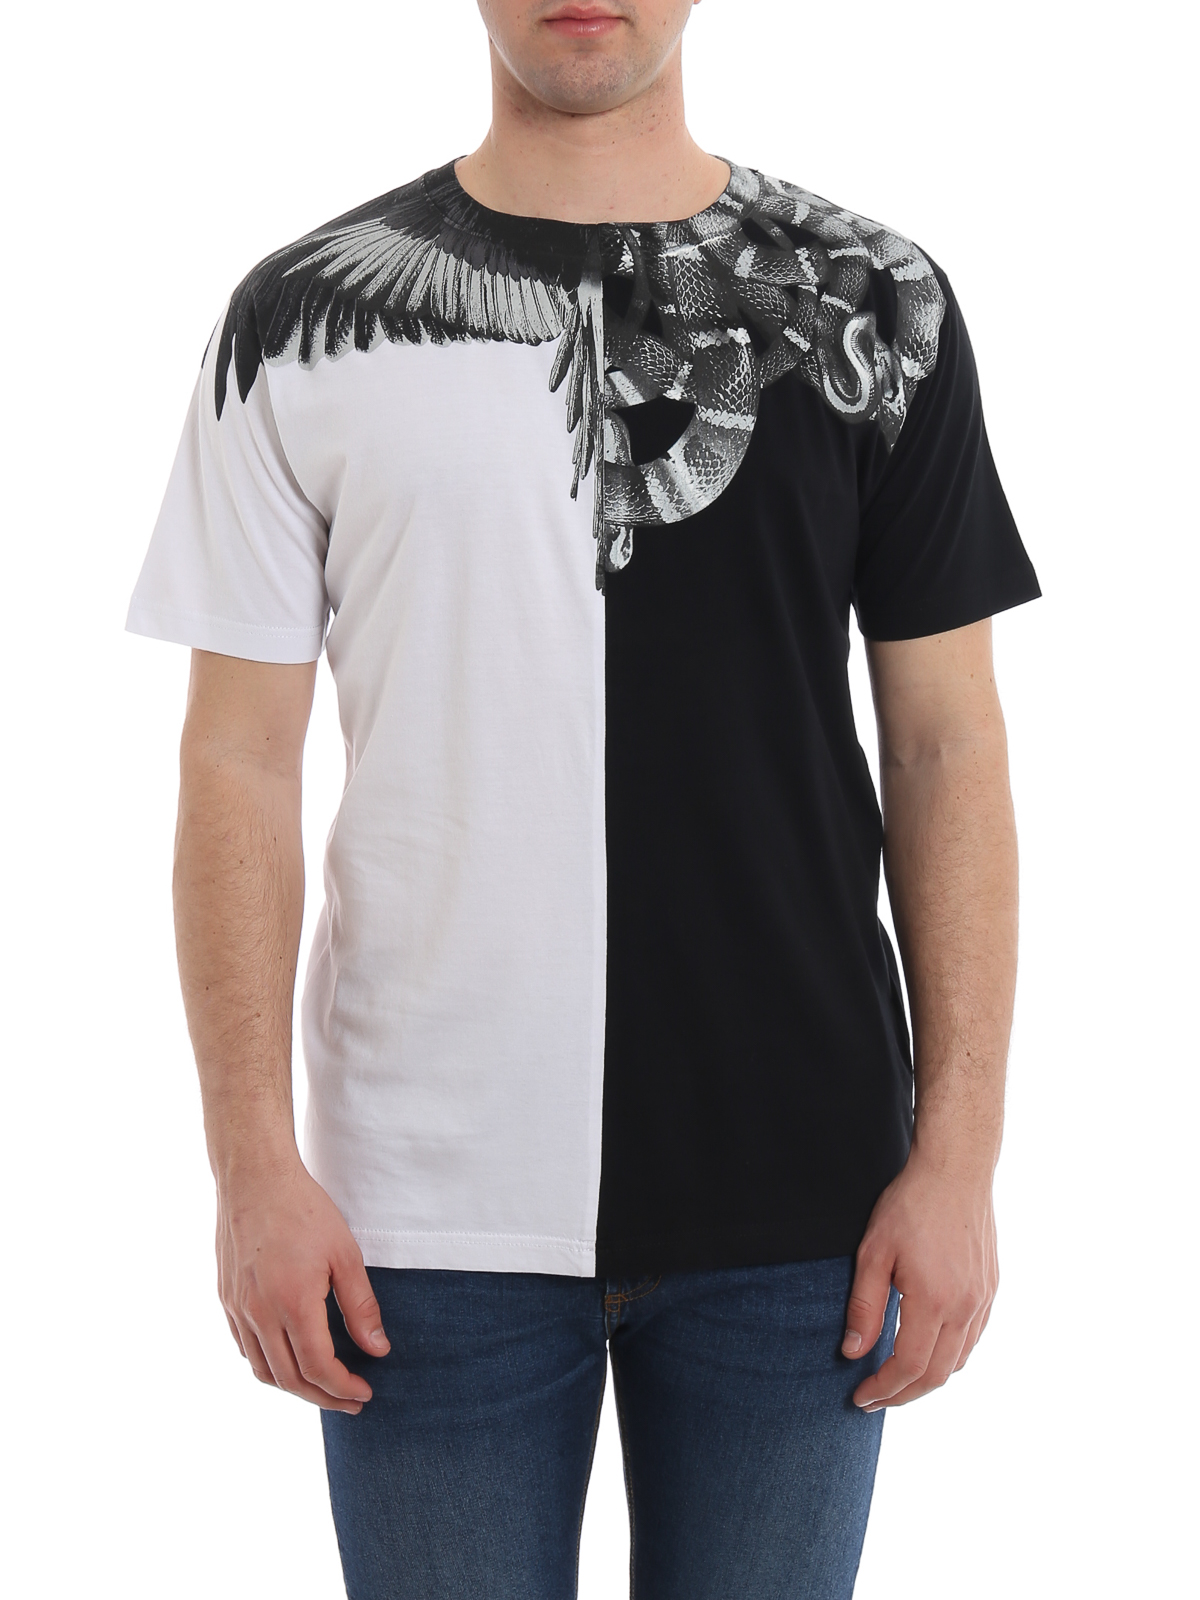 T-shirts Marcelo Burlon - Wings Snakes black and white T-shirt